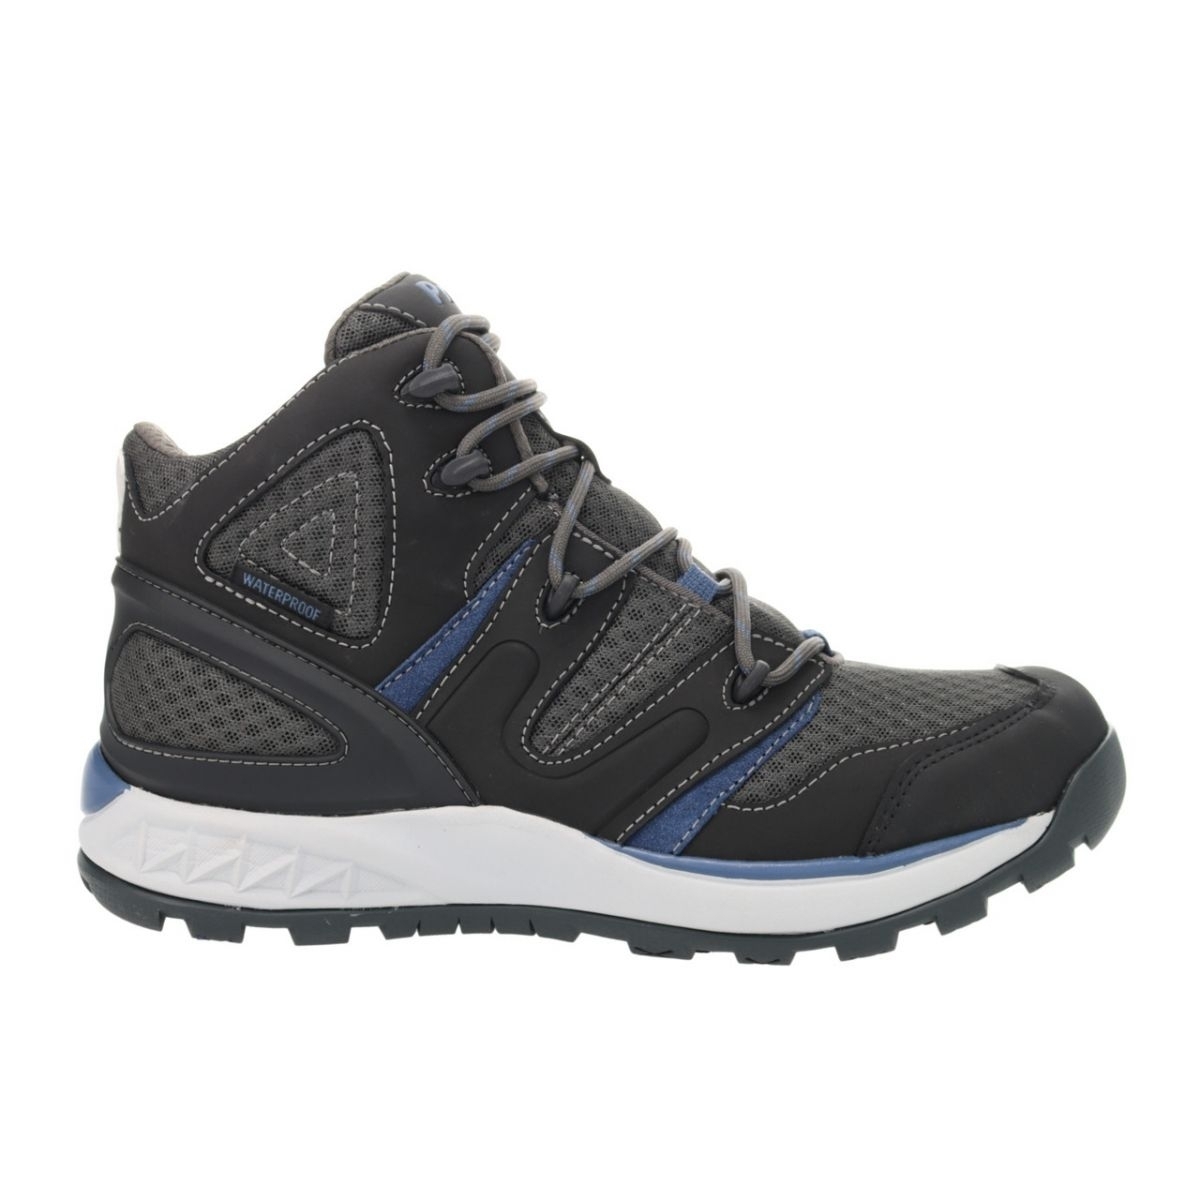 Propet Men's Veymont Waterproof Hiking Boot Grey/Blue - MOA022SGRB GREY/BLUE - GREY/BLUE, 16